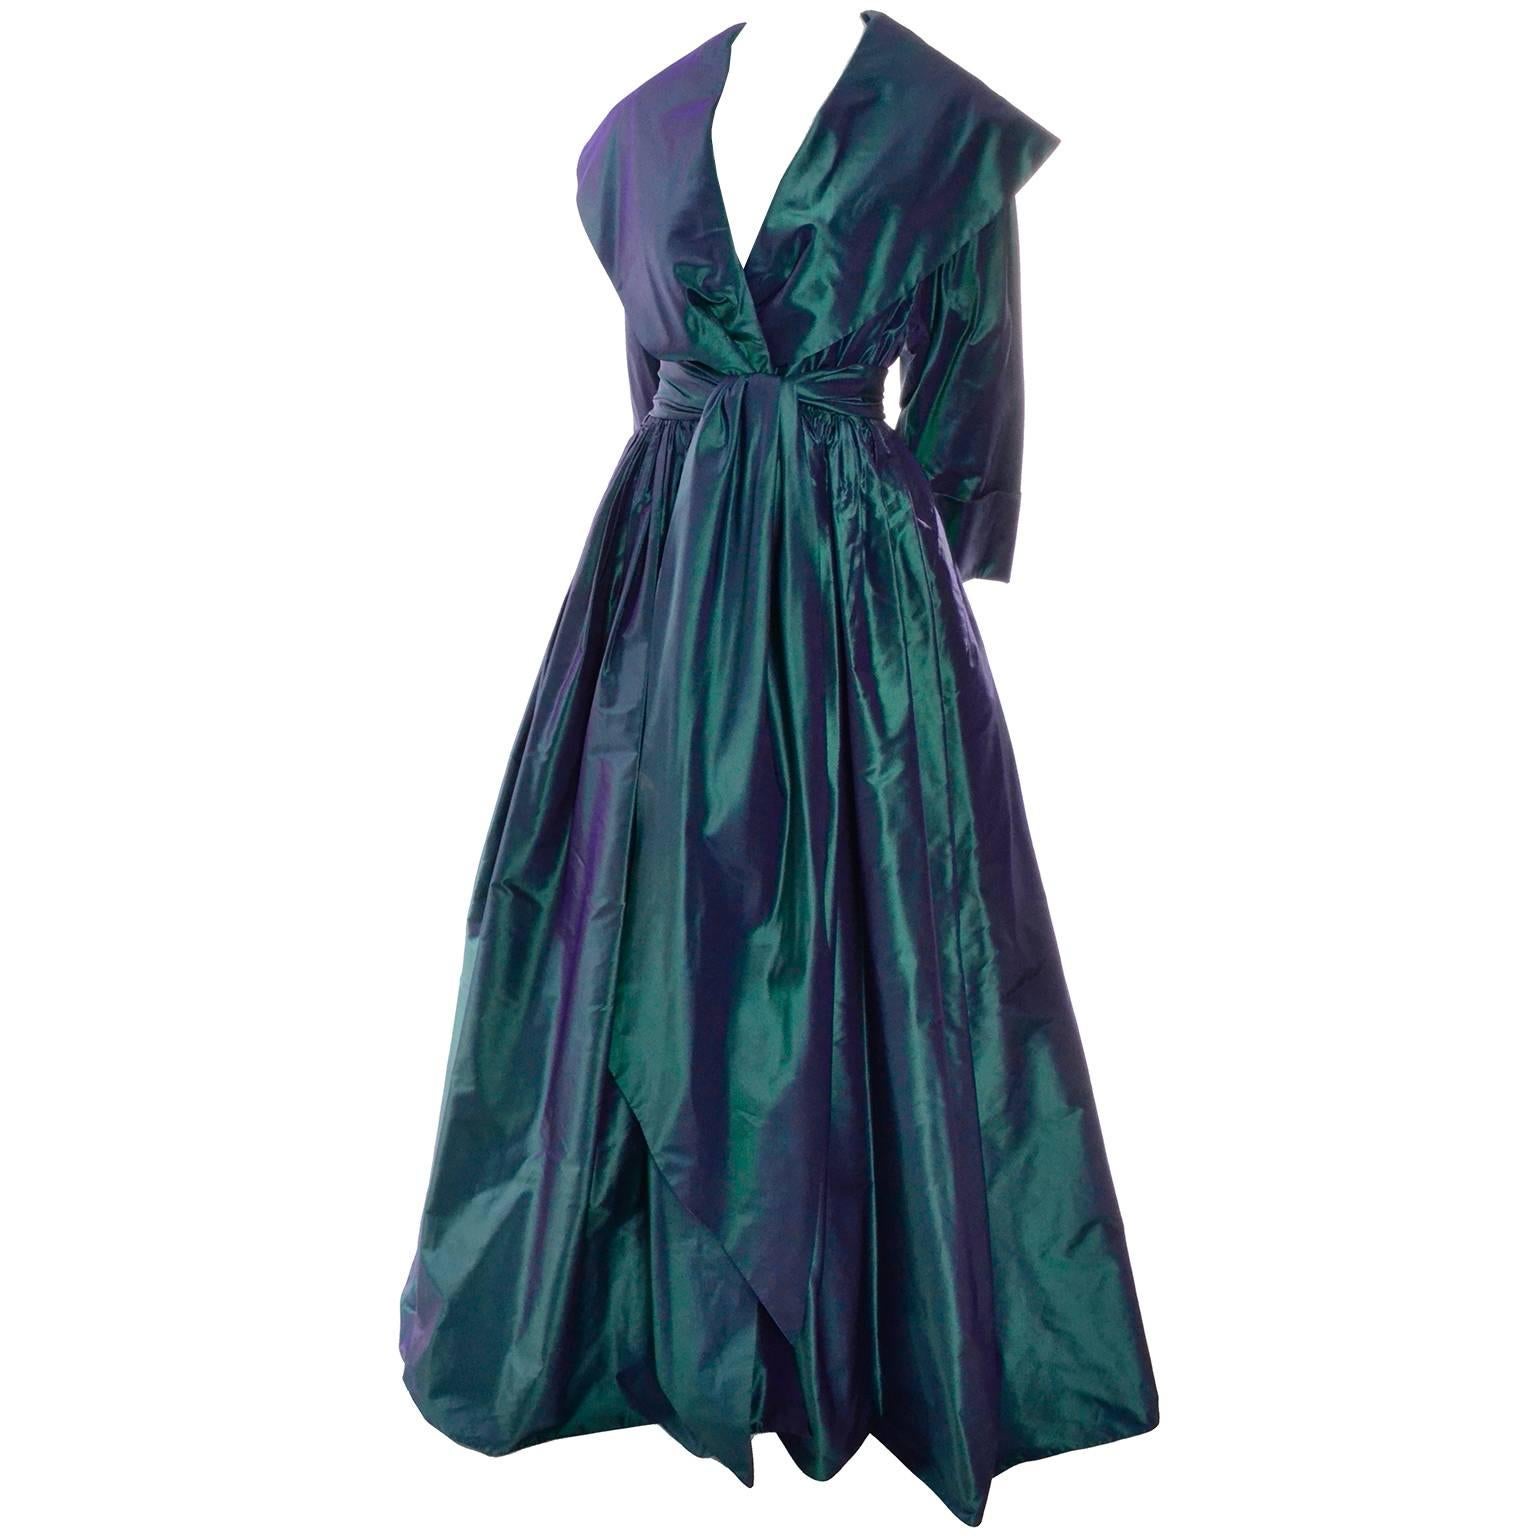 Blue Carolyne Roehm Vintage Dress Iridescent Bergdorf Goodman Taffeta Ballgown 10